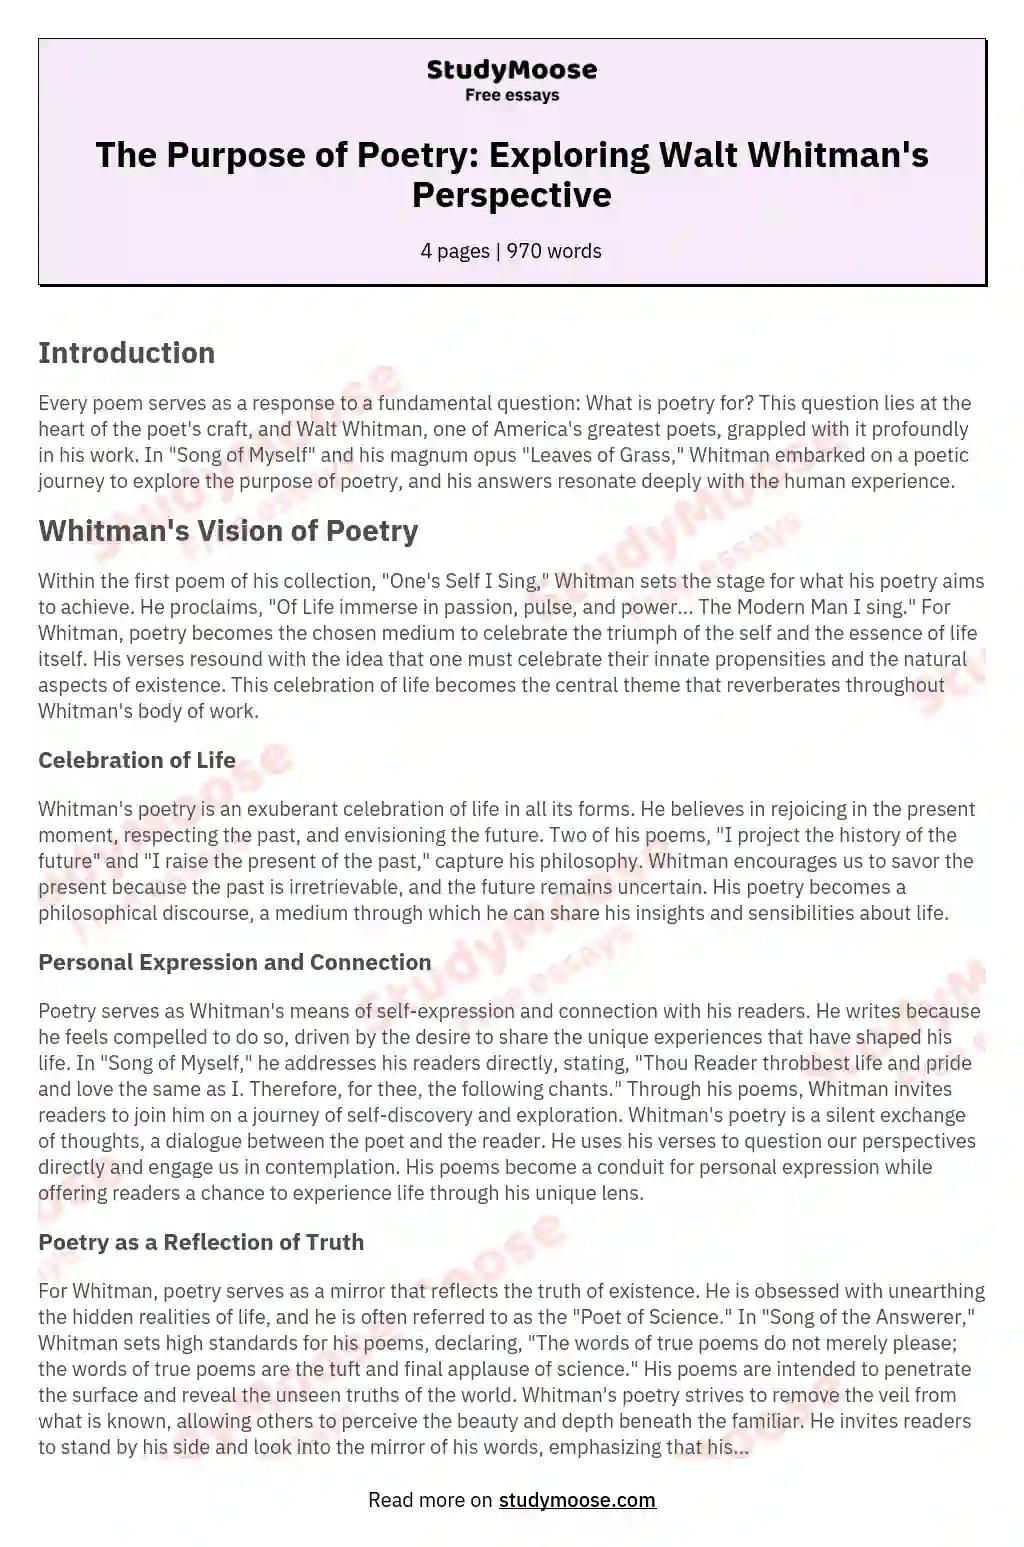 The Purpose of Poetry: Exploring Walt Whitman's Perspective essay